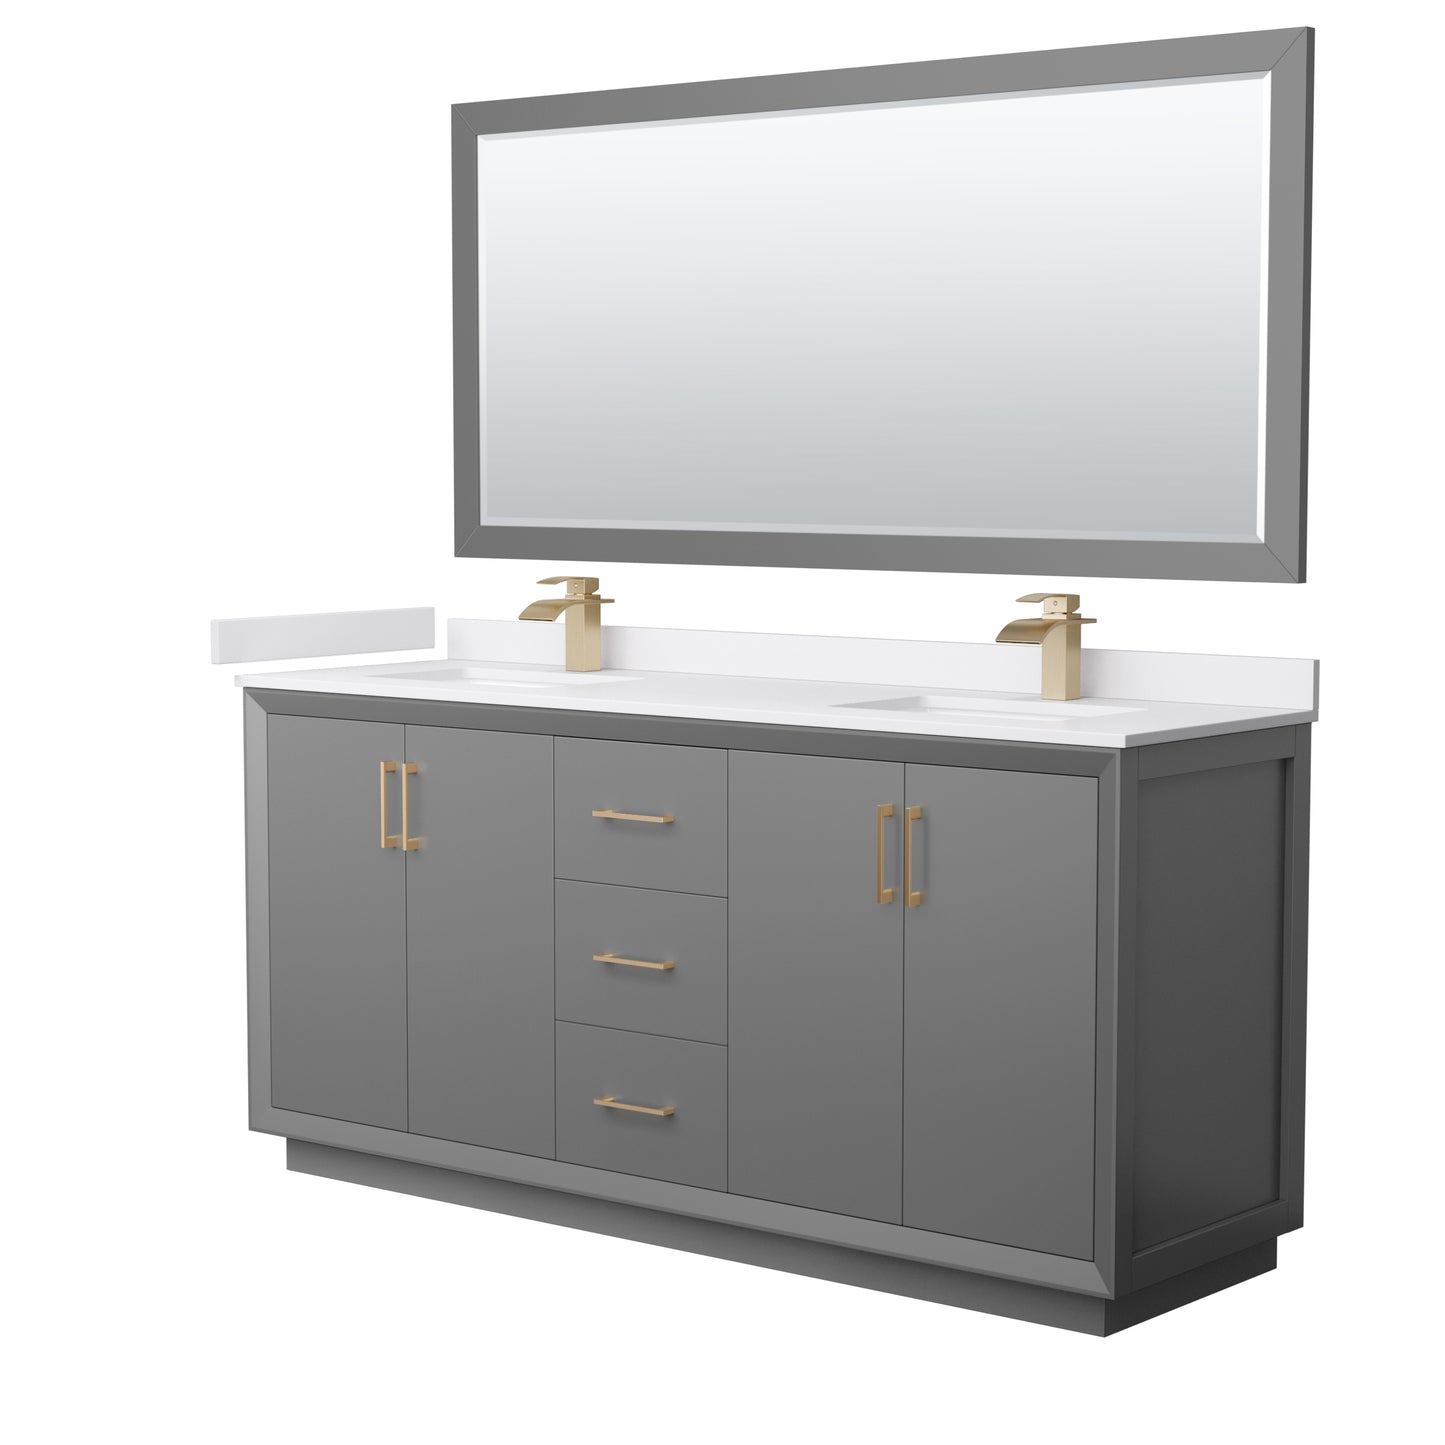 Wyndham Strada 72 Inch Double Bathroom Vanity Cultured Marble Countertop Undermount Square Sink 70 Inch Mirror - Luxe Bathroom Vanities